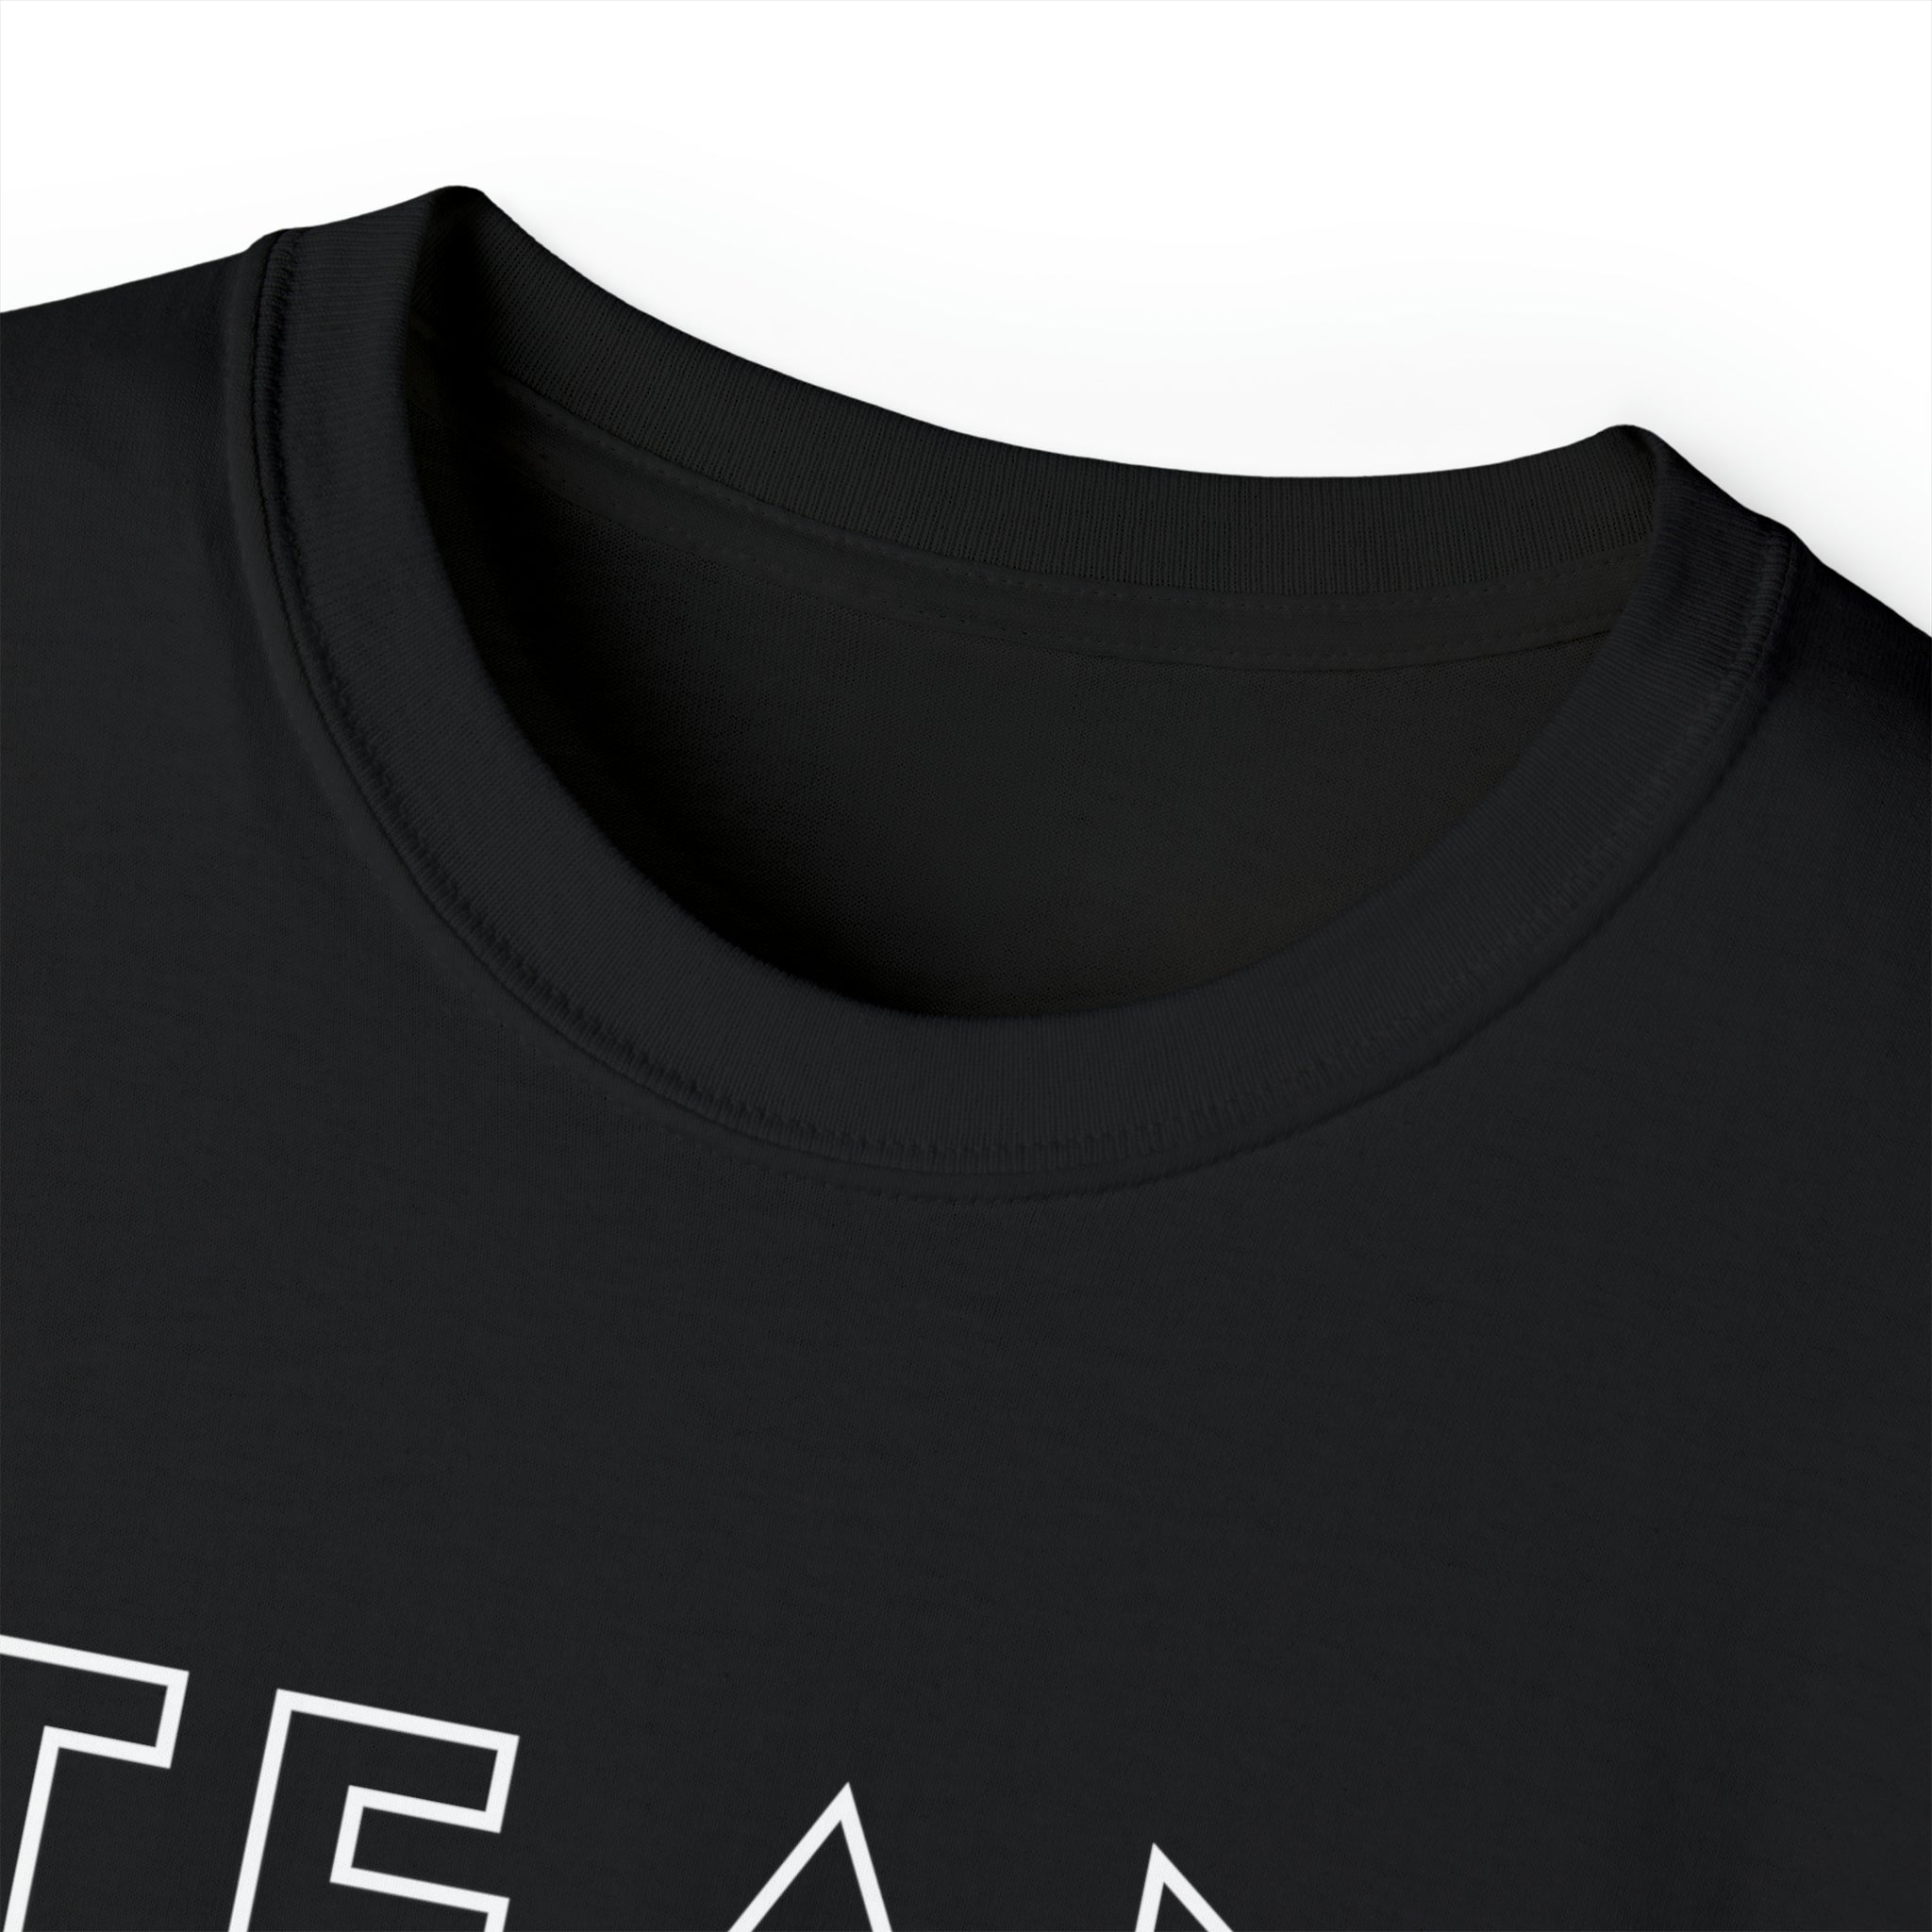 Team Boy - Unisex Shirt